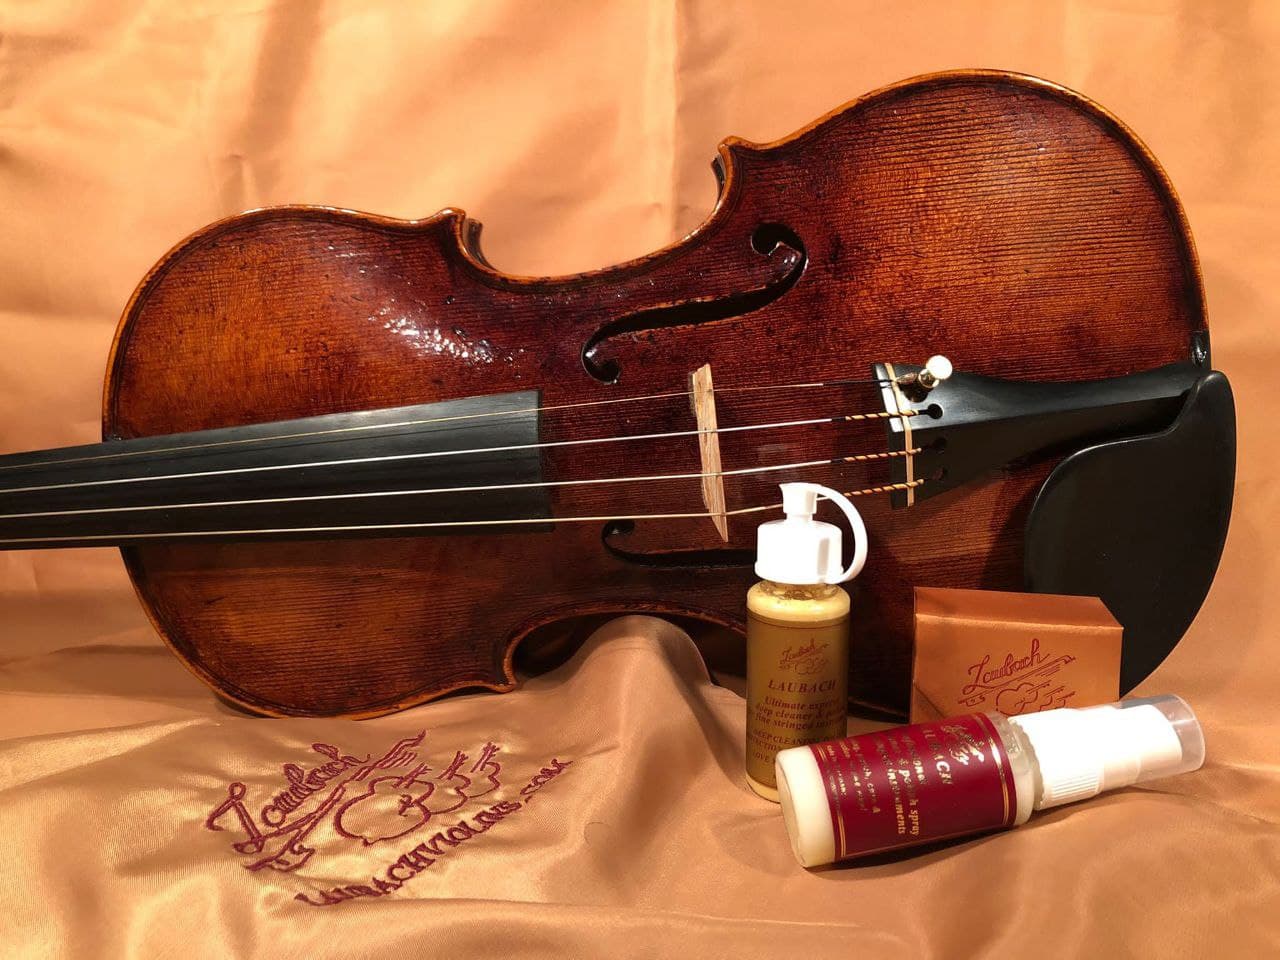 Special prize is violin by Laubach, violin maker was awarded to Pyotr Fedotov